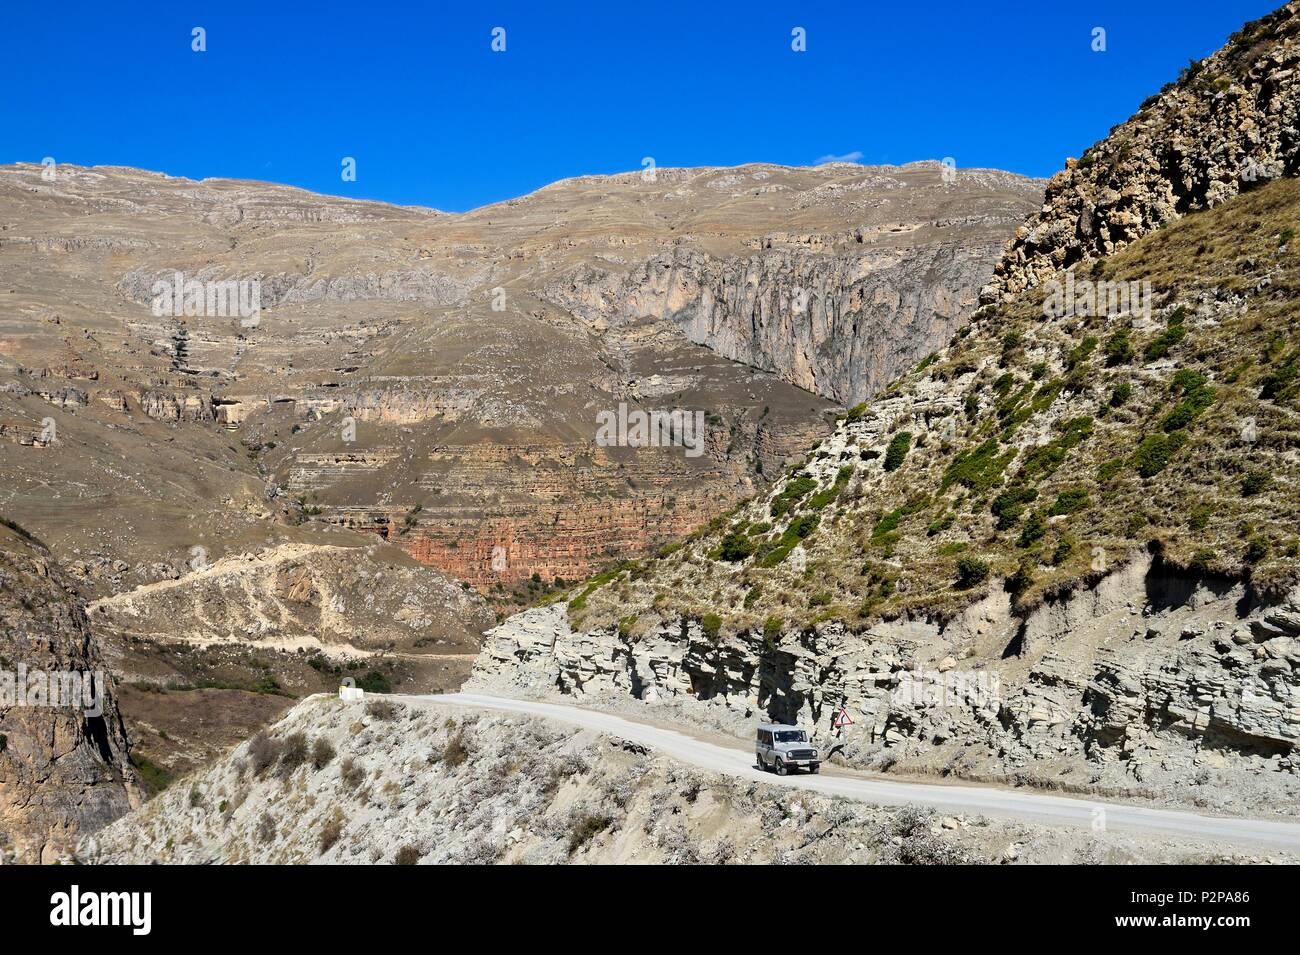 Azerbaijan, Quba (Guba) region, Greater Caucasus mountain range, along Xinaliq Yolu road towards Khinalug in the Qudialchai valley Stock Photo